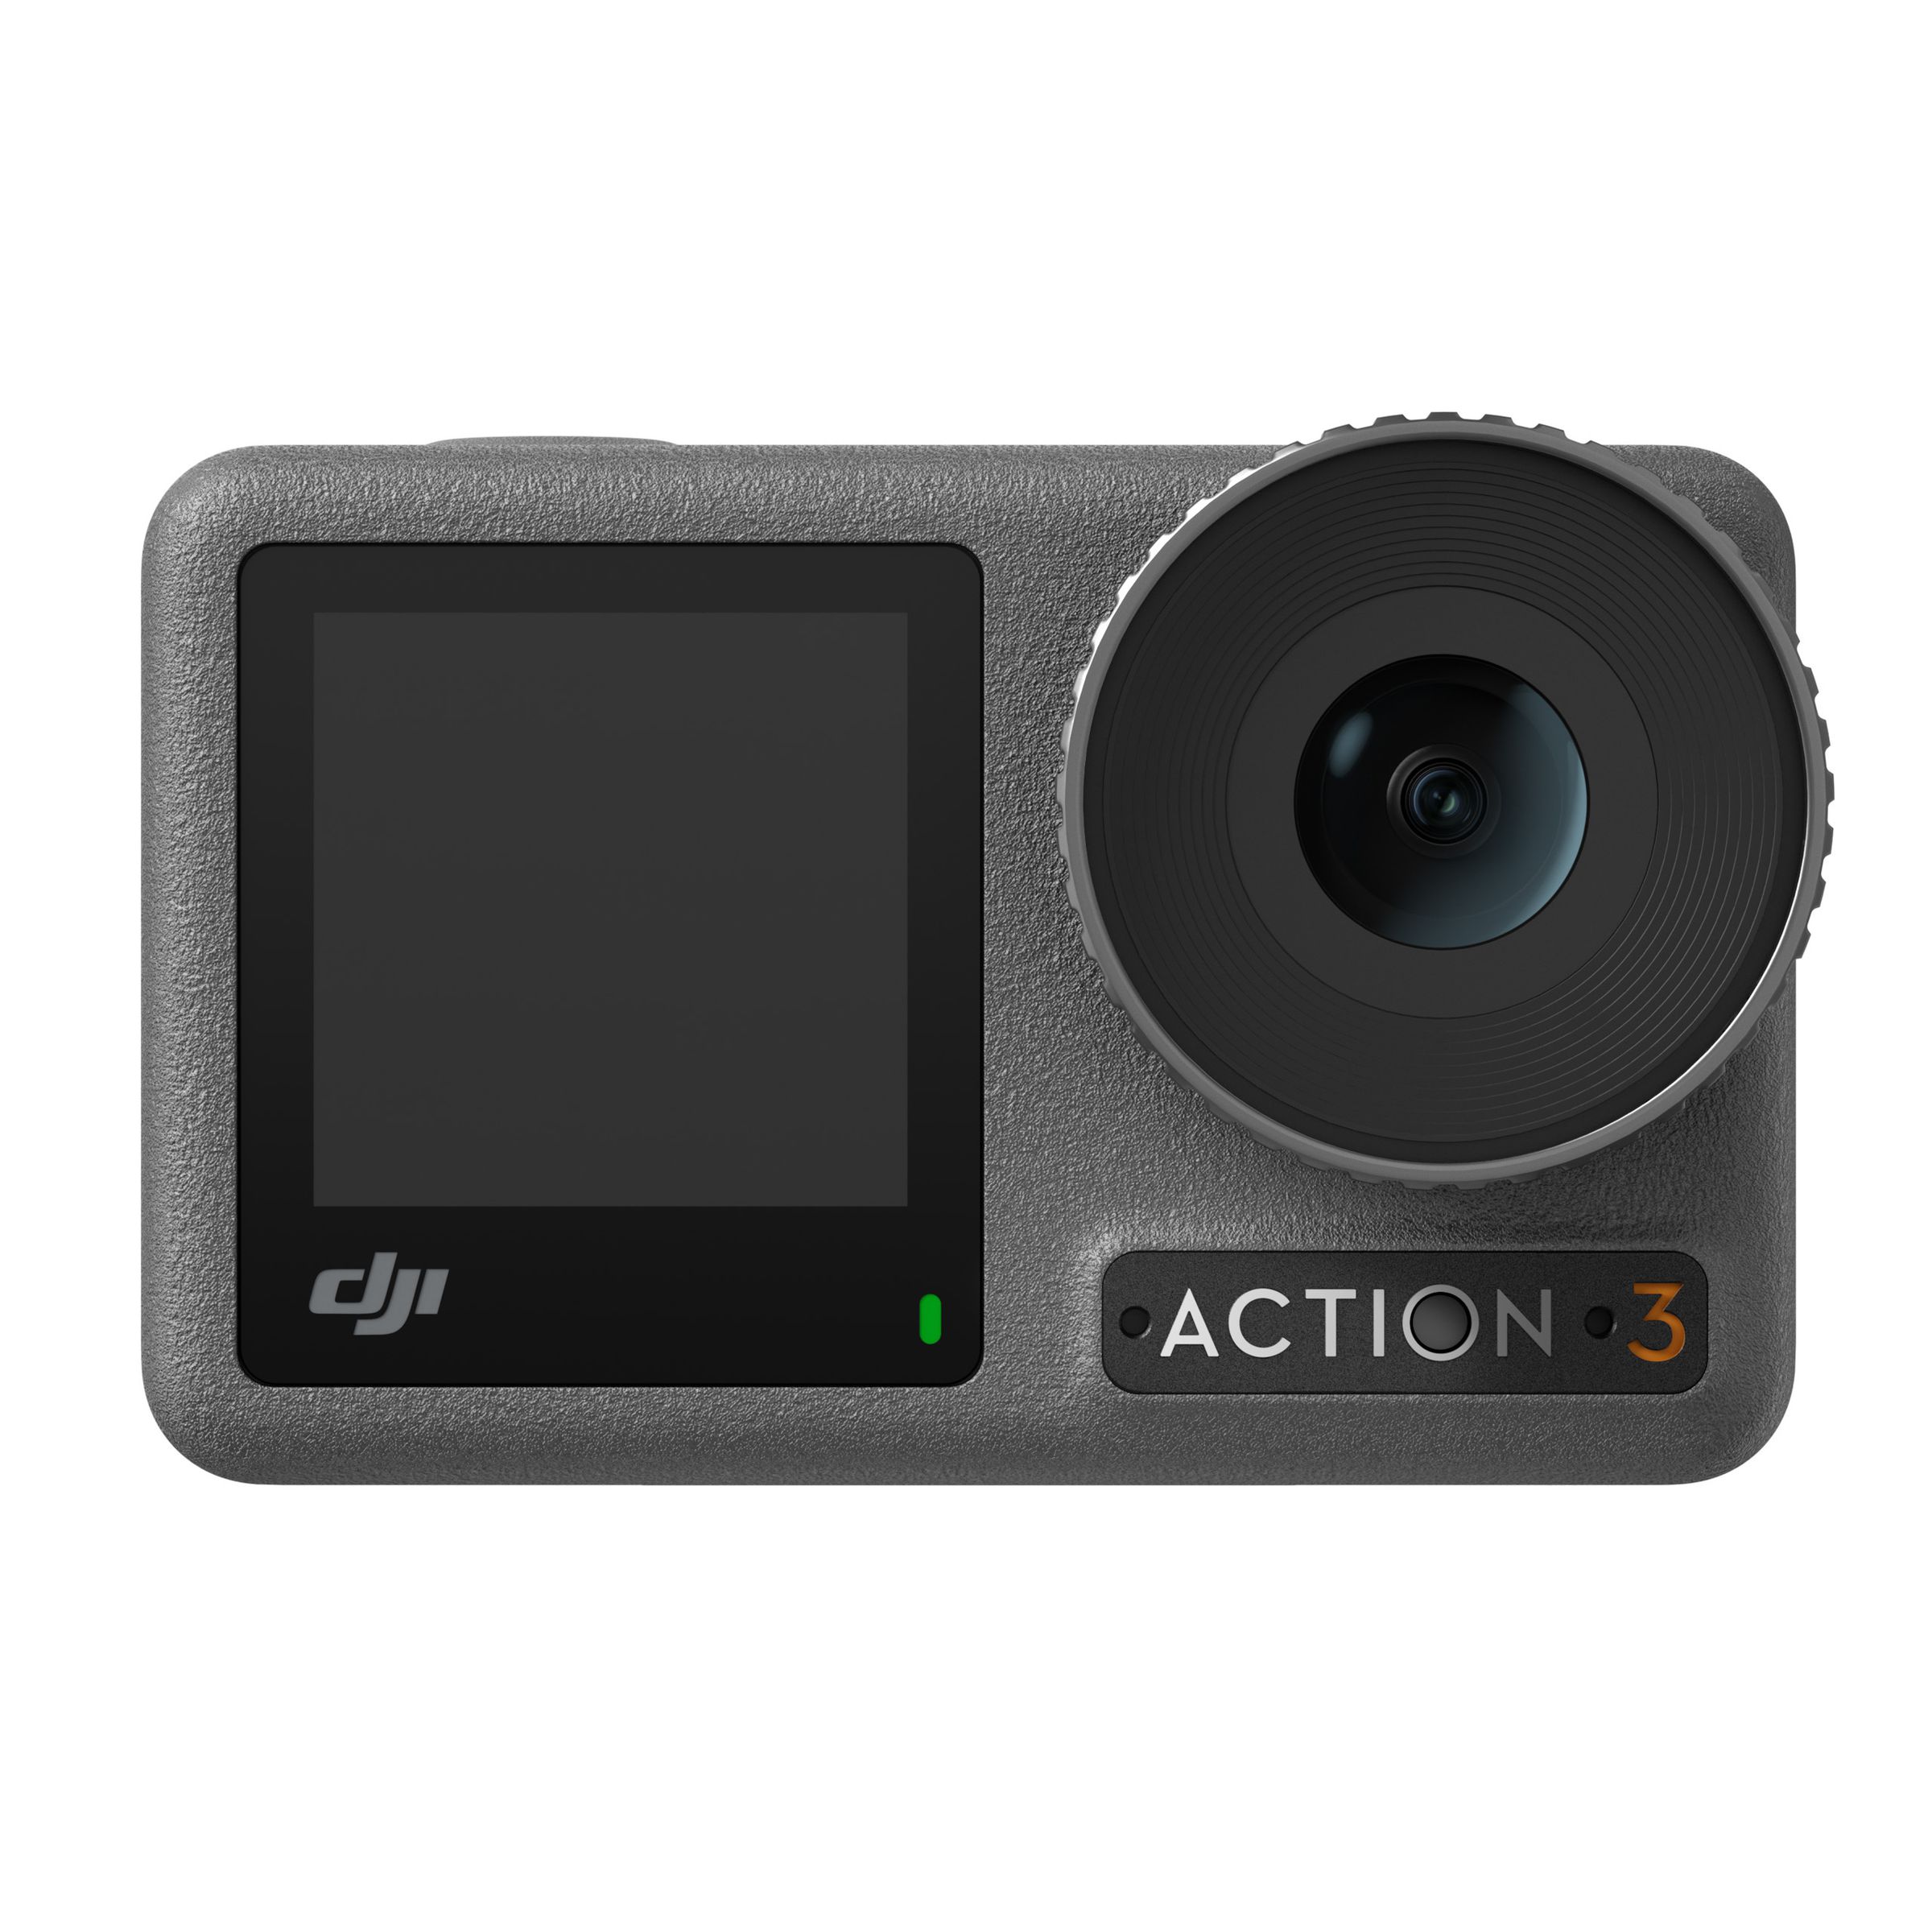 <em>Product shots of the DJI Osmo Action 3 show a similar design to the original DJI Osmo action camera.</em>